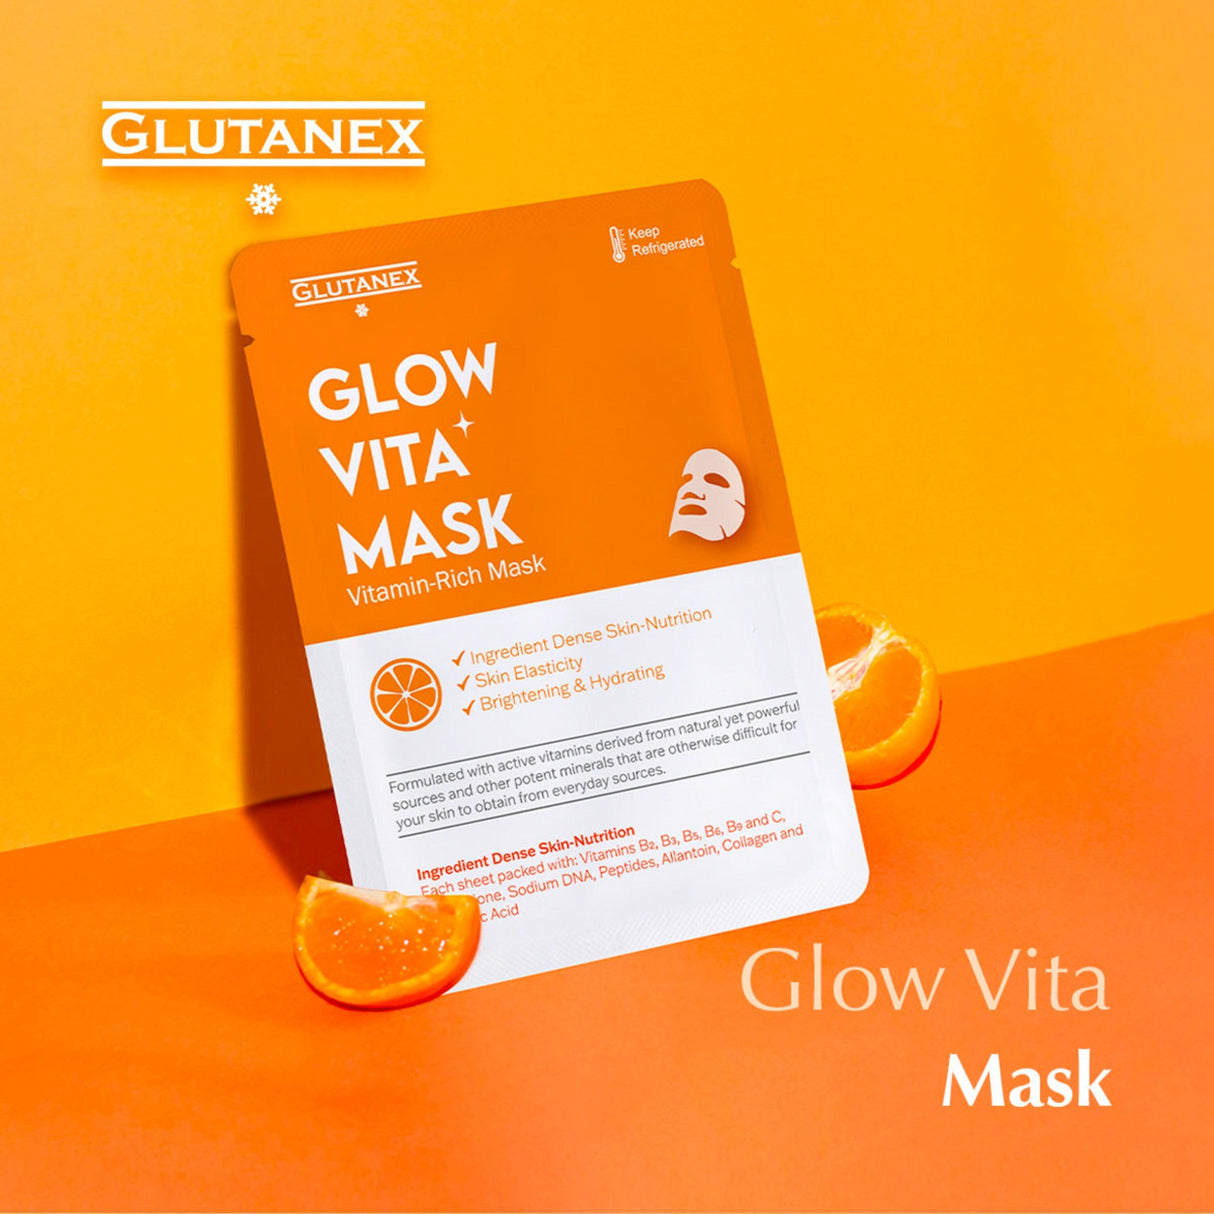 Glow Vita Mask - GLUTANEX USA